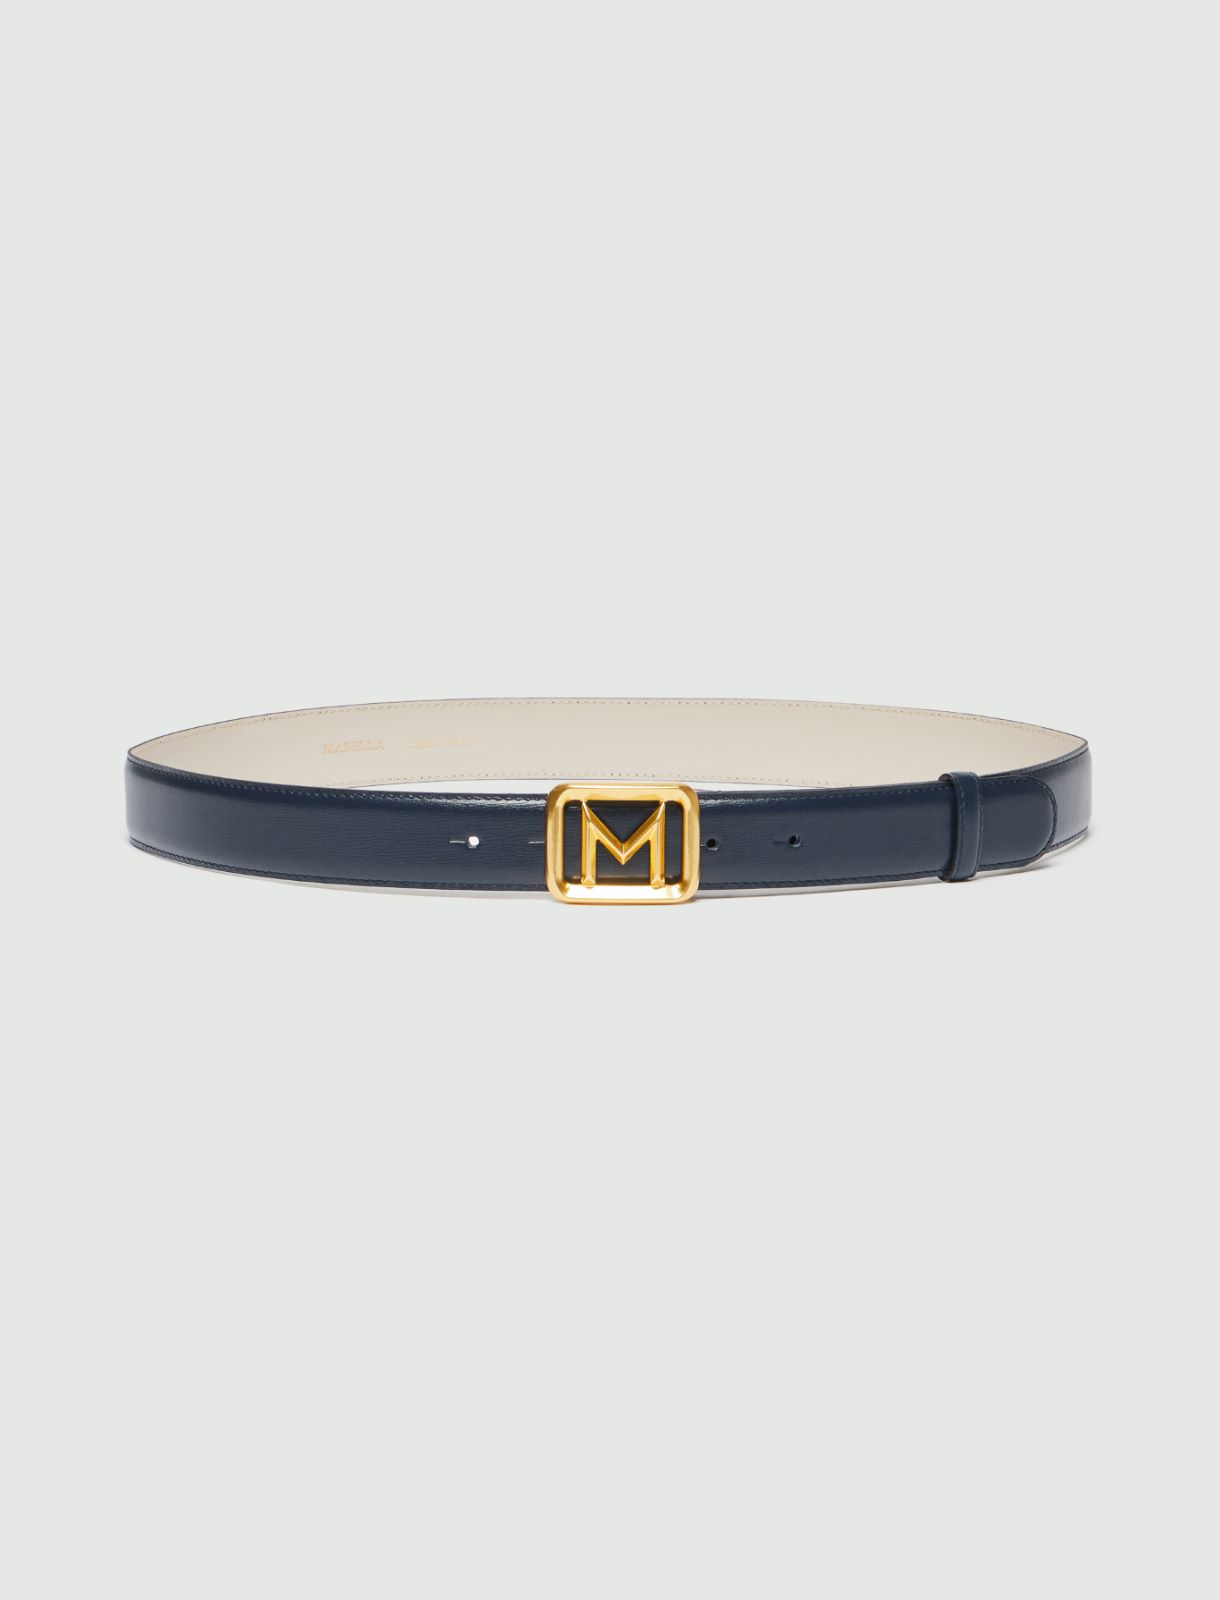 Leather belt - Navy - Marella - 2